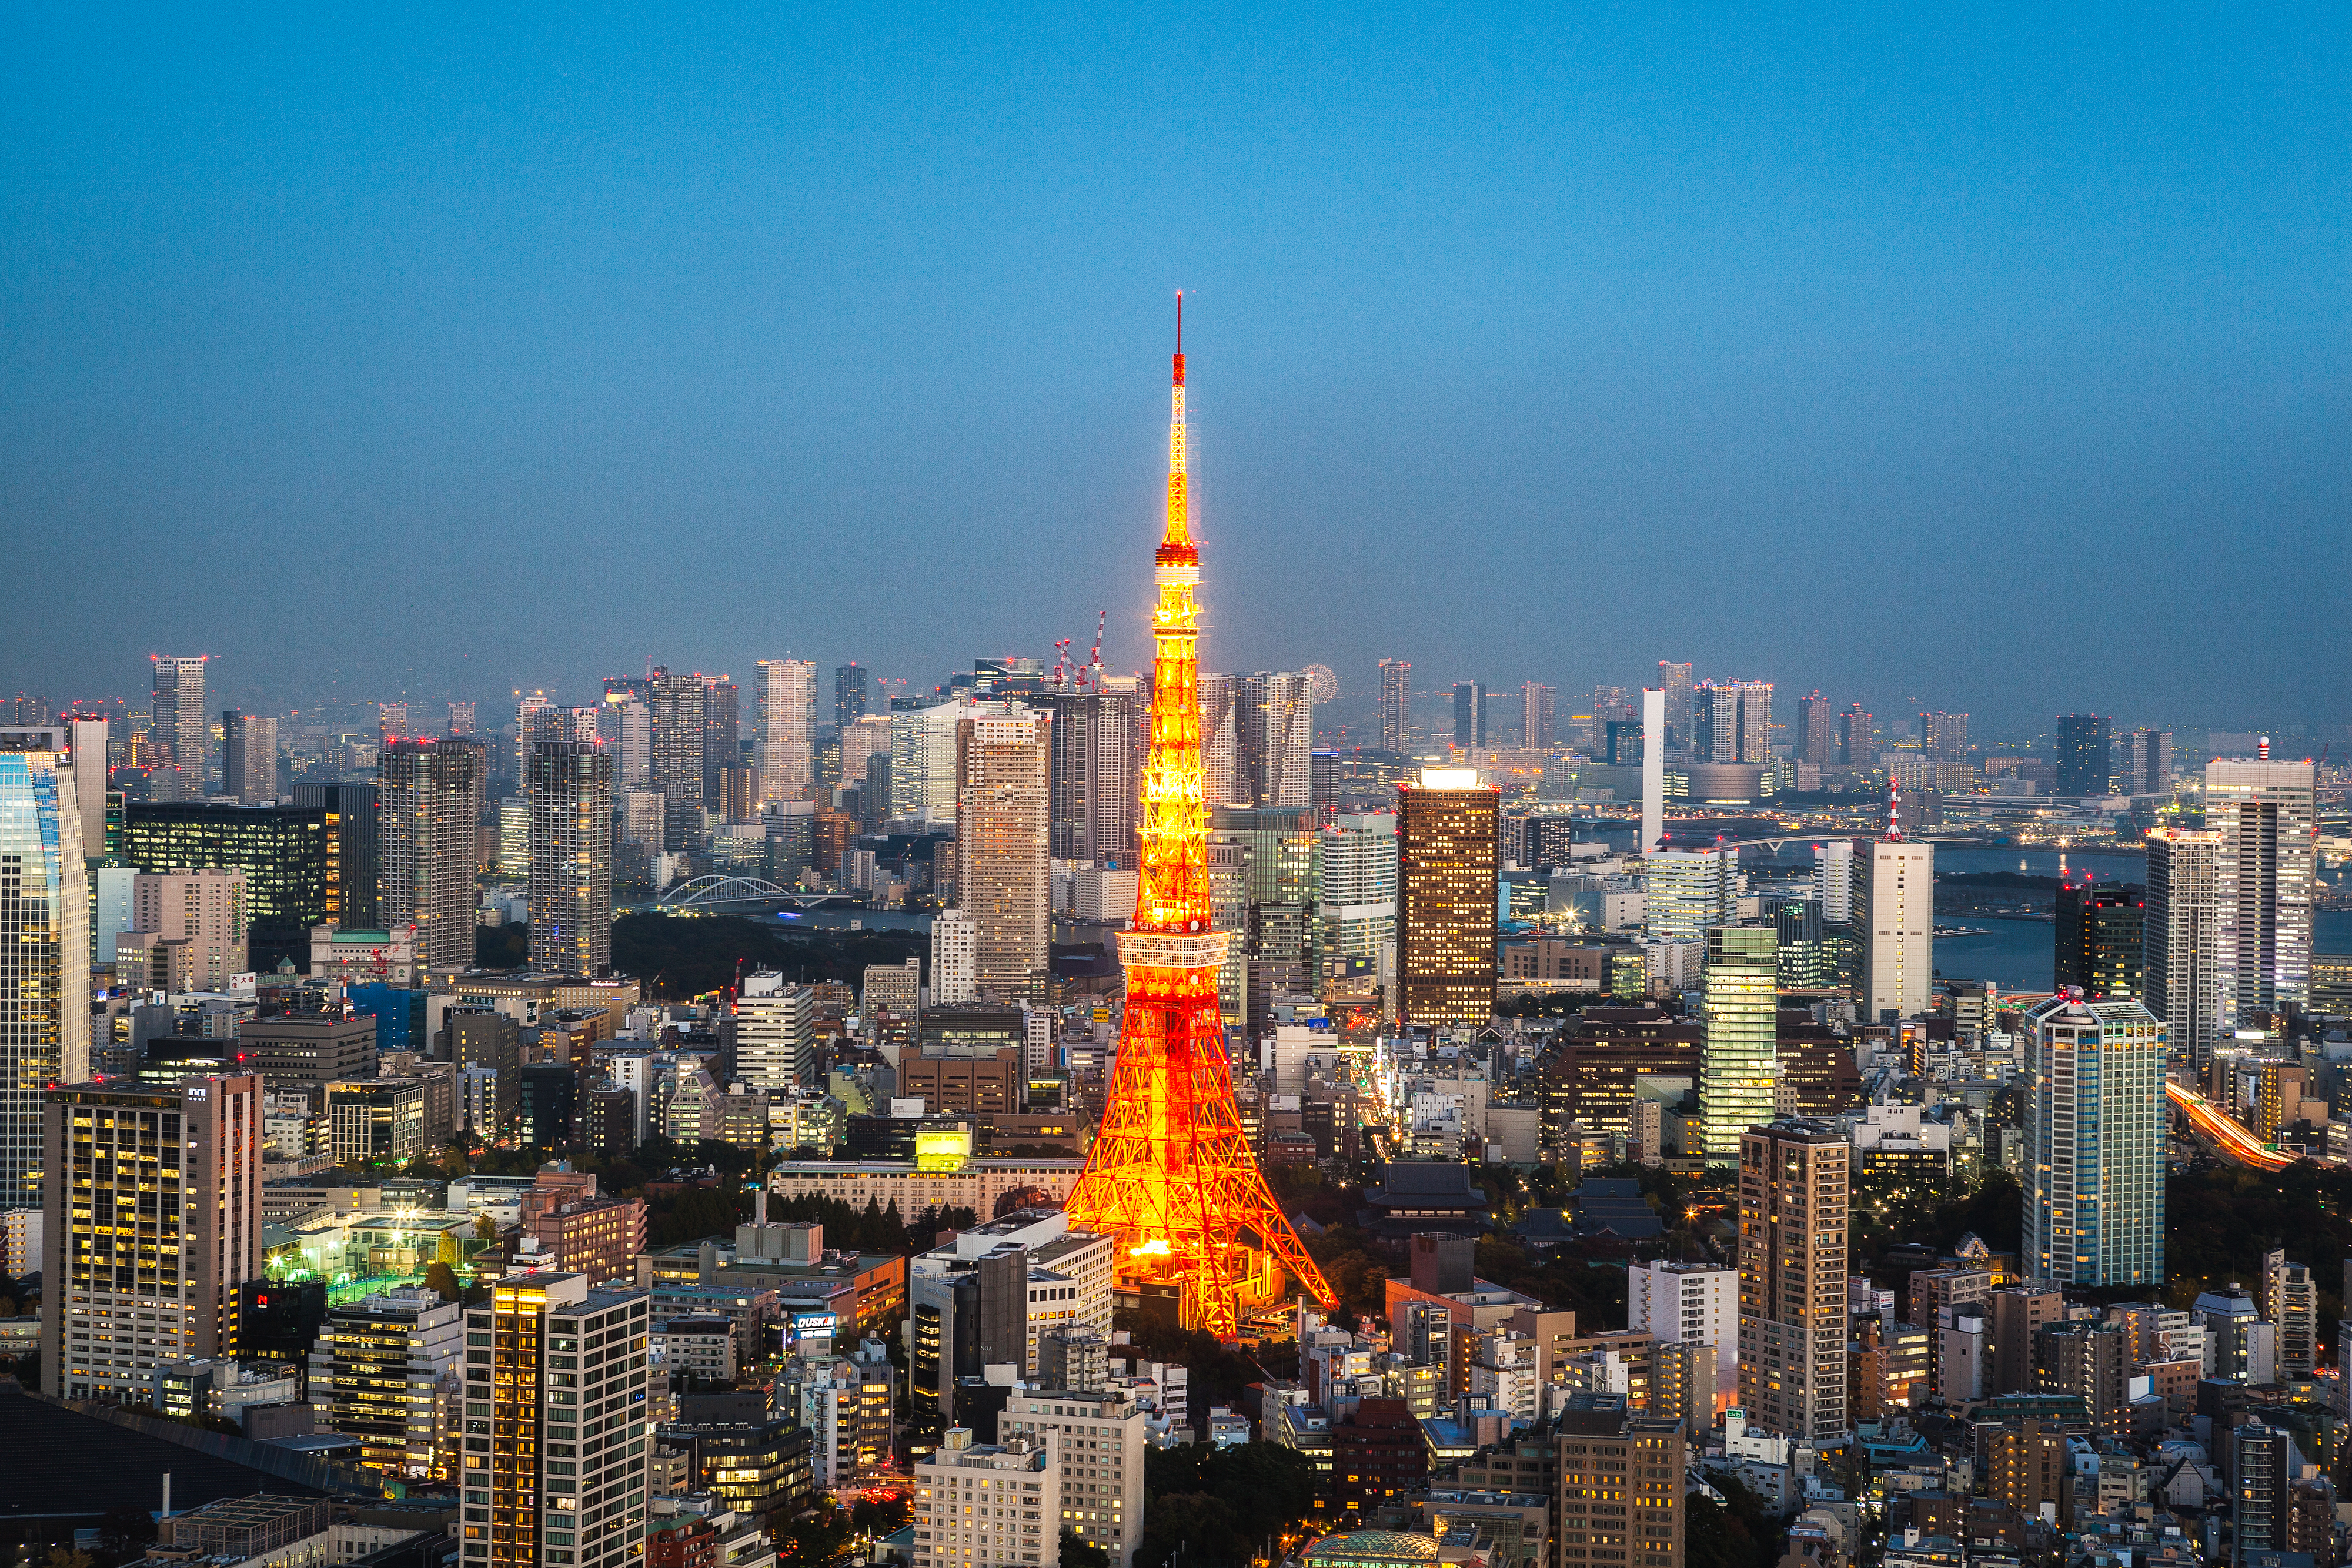 Tokyo Tower 4k Ultra HD Wallpaper by Michael Matti